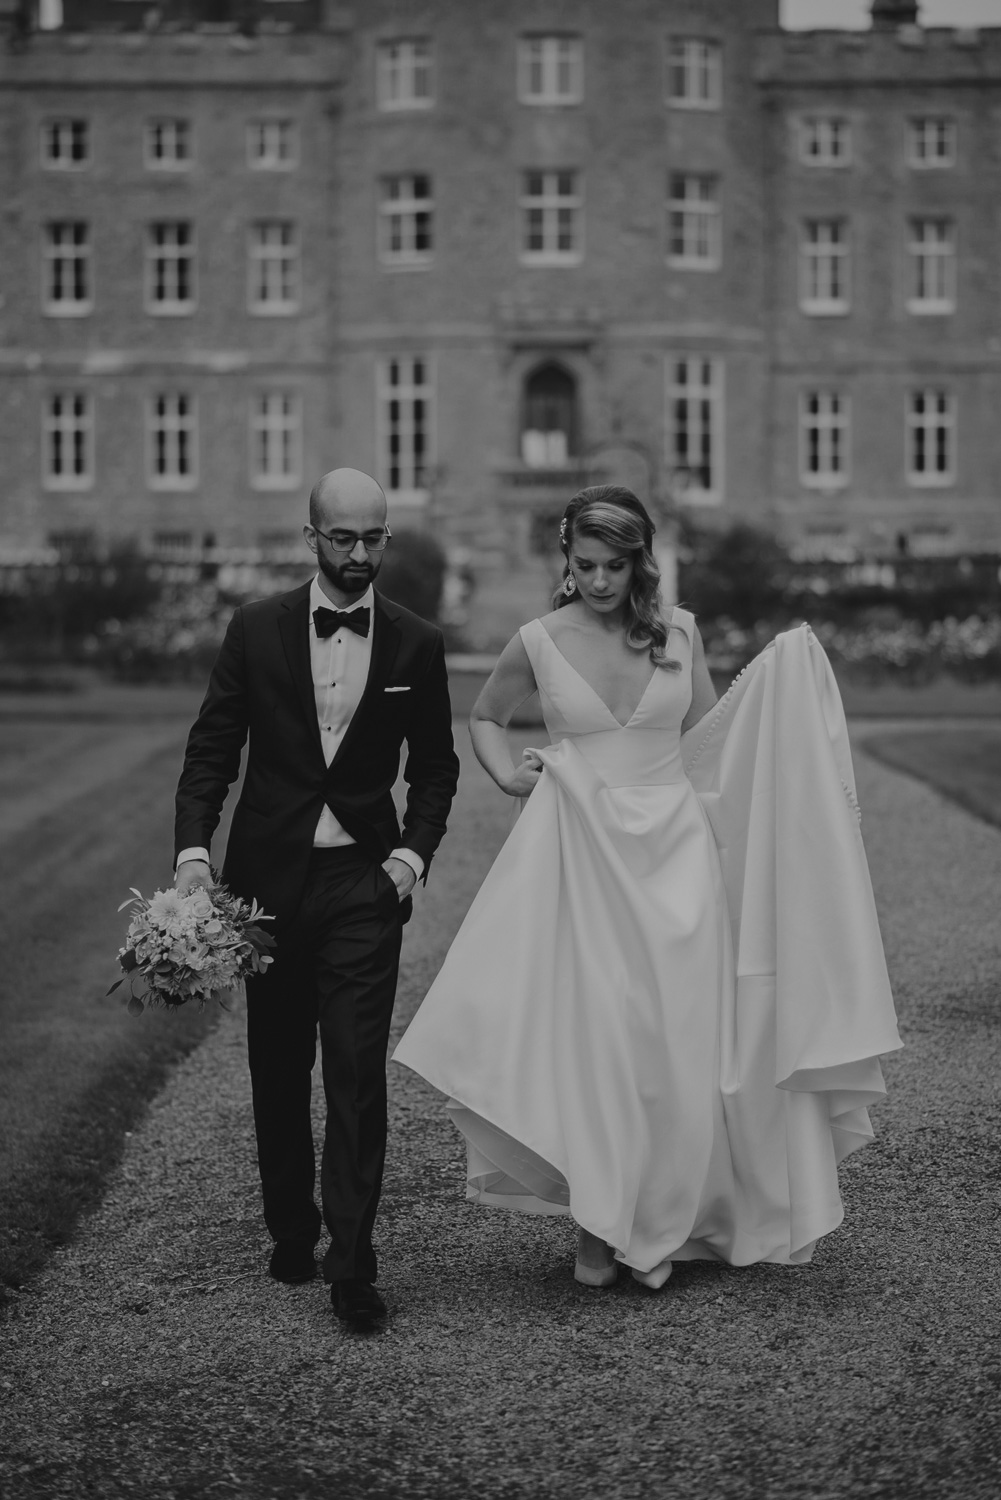 Markree castle wedding photographs -34.jpg